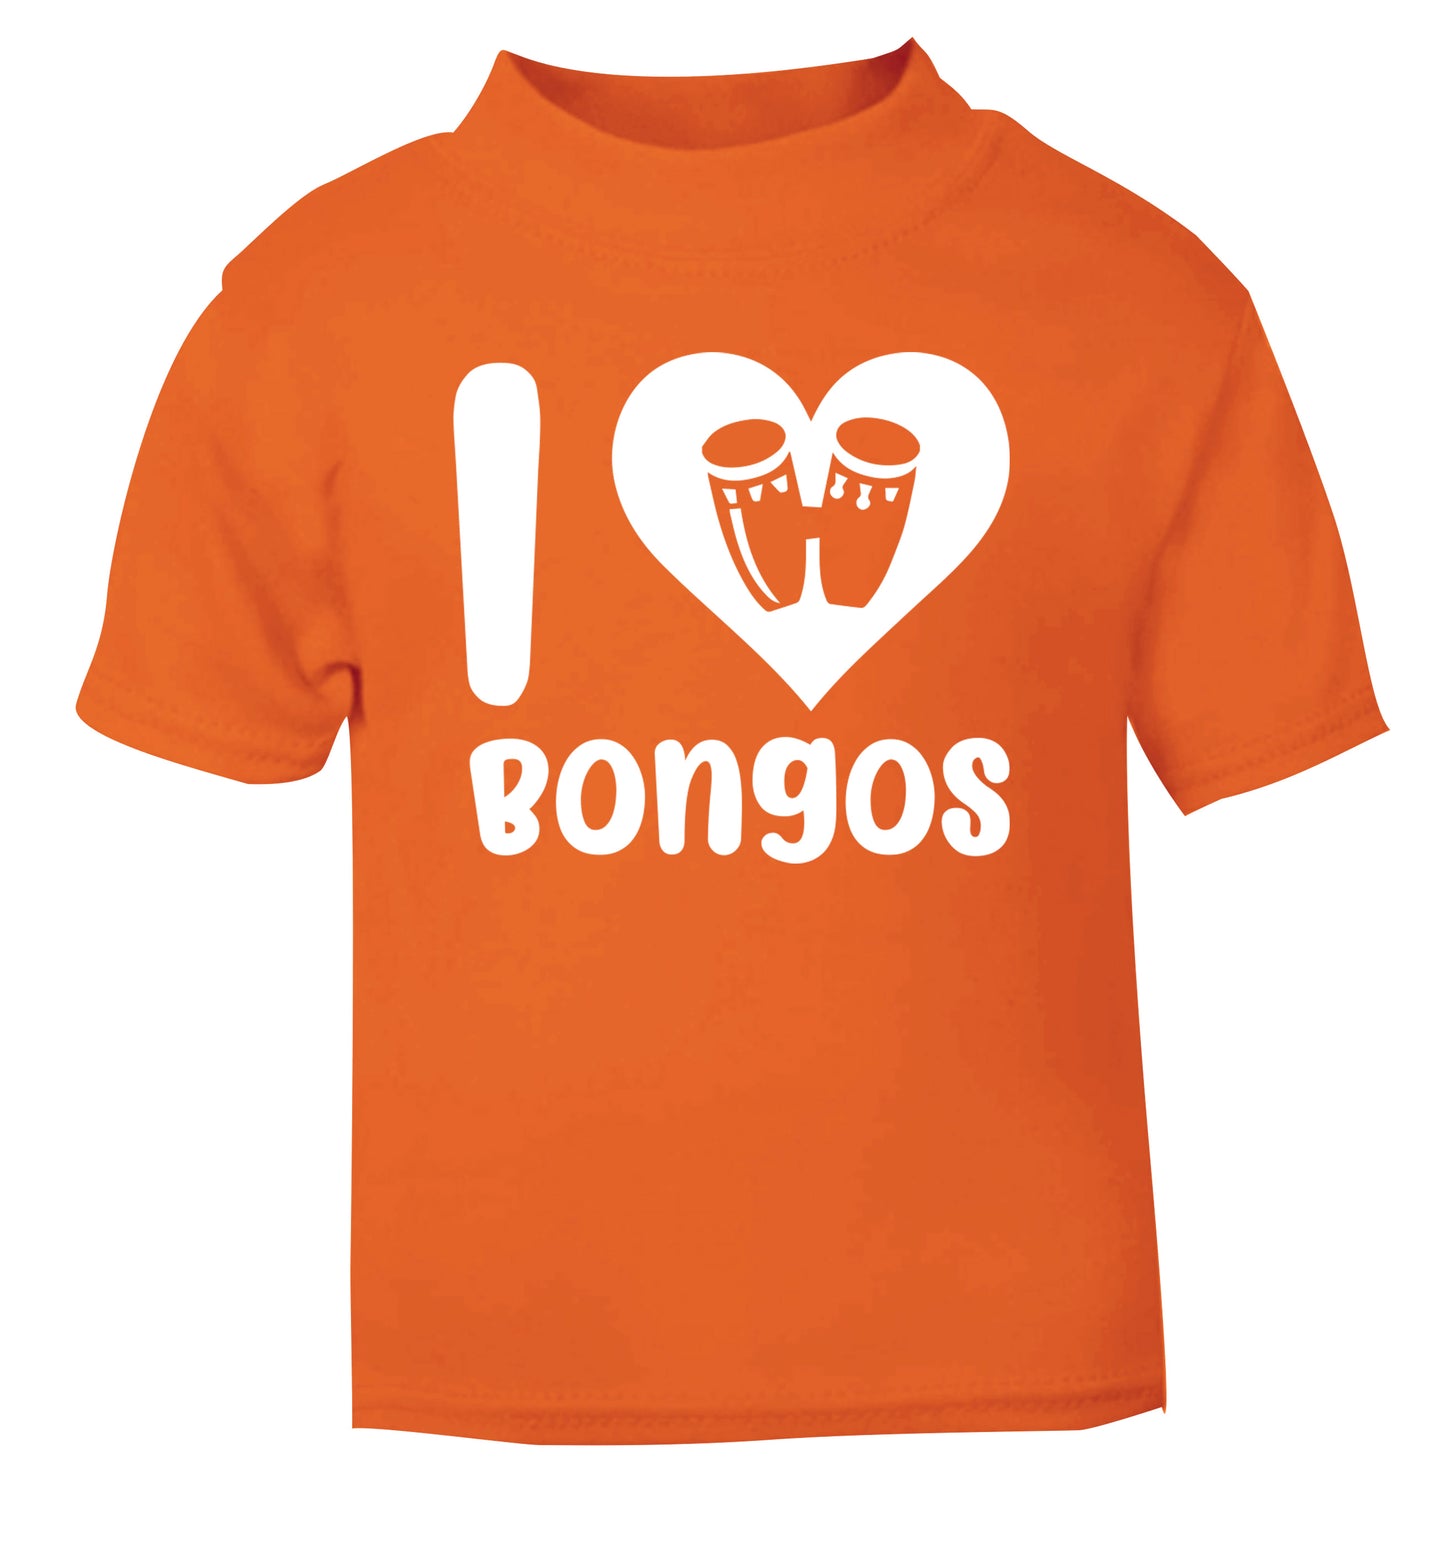 I love bongos orange Baby Toddler Tshirt 2 Years